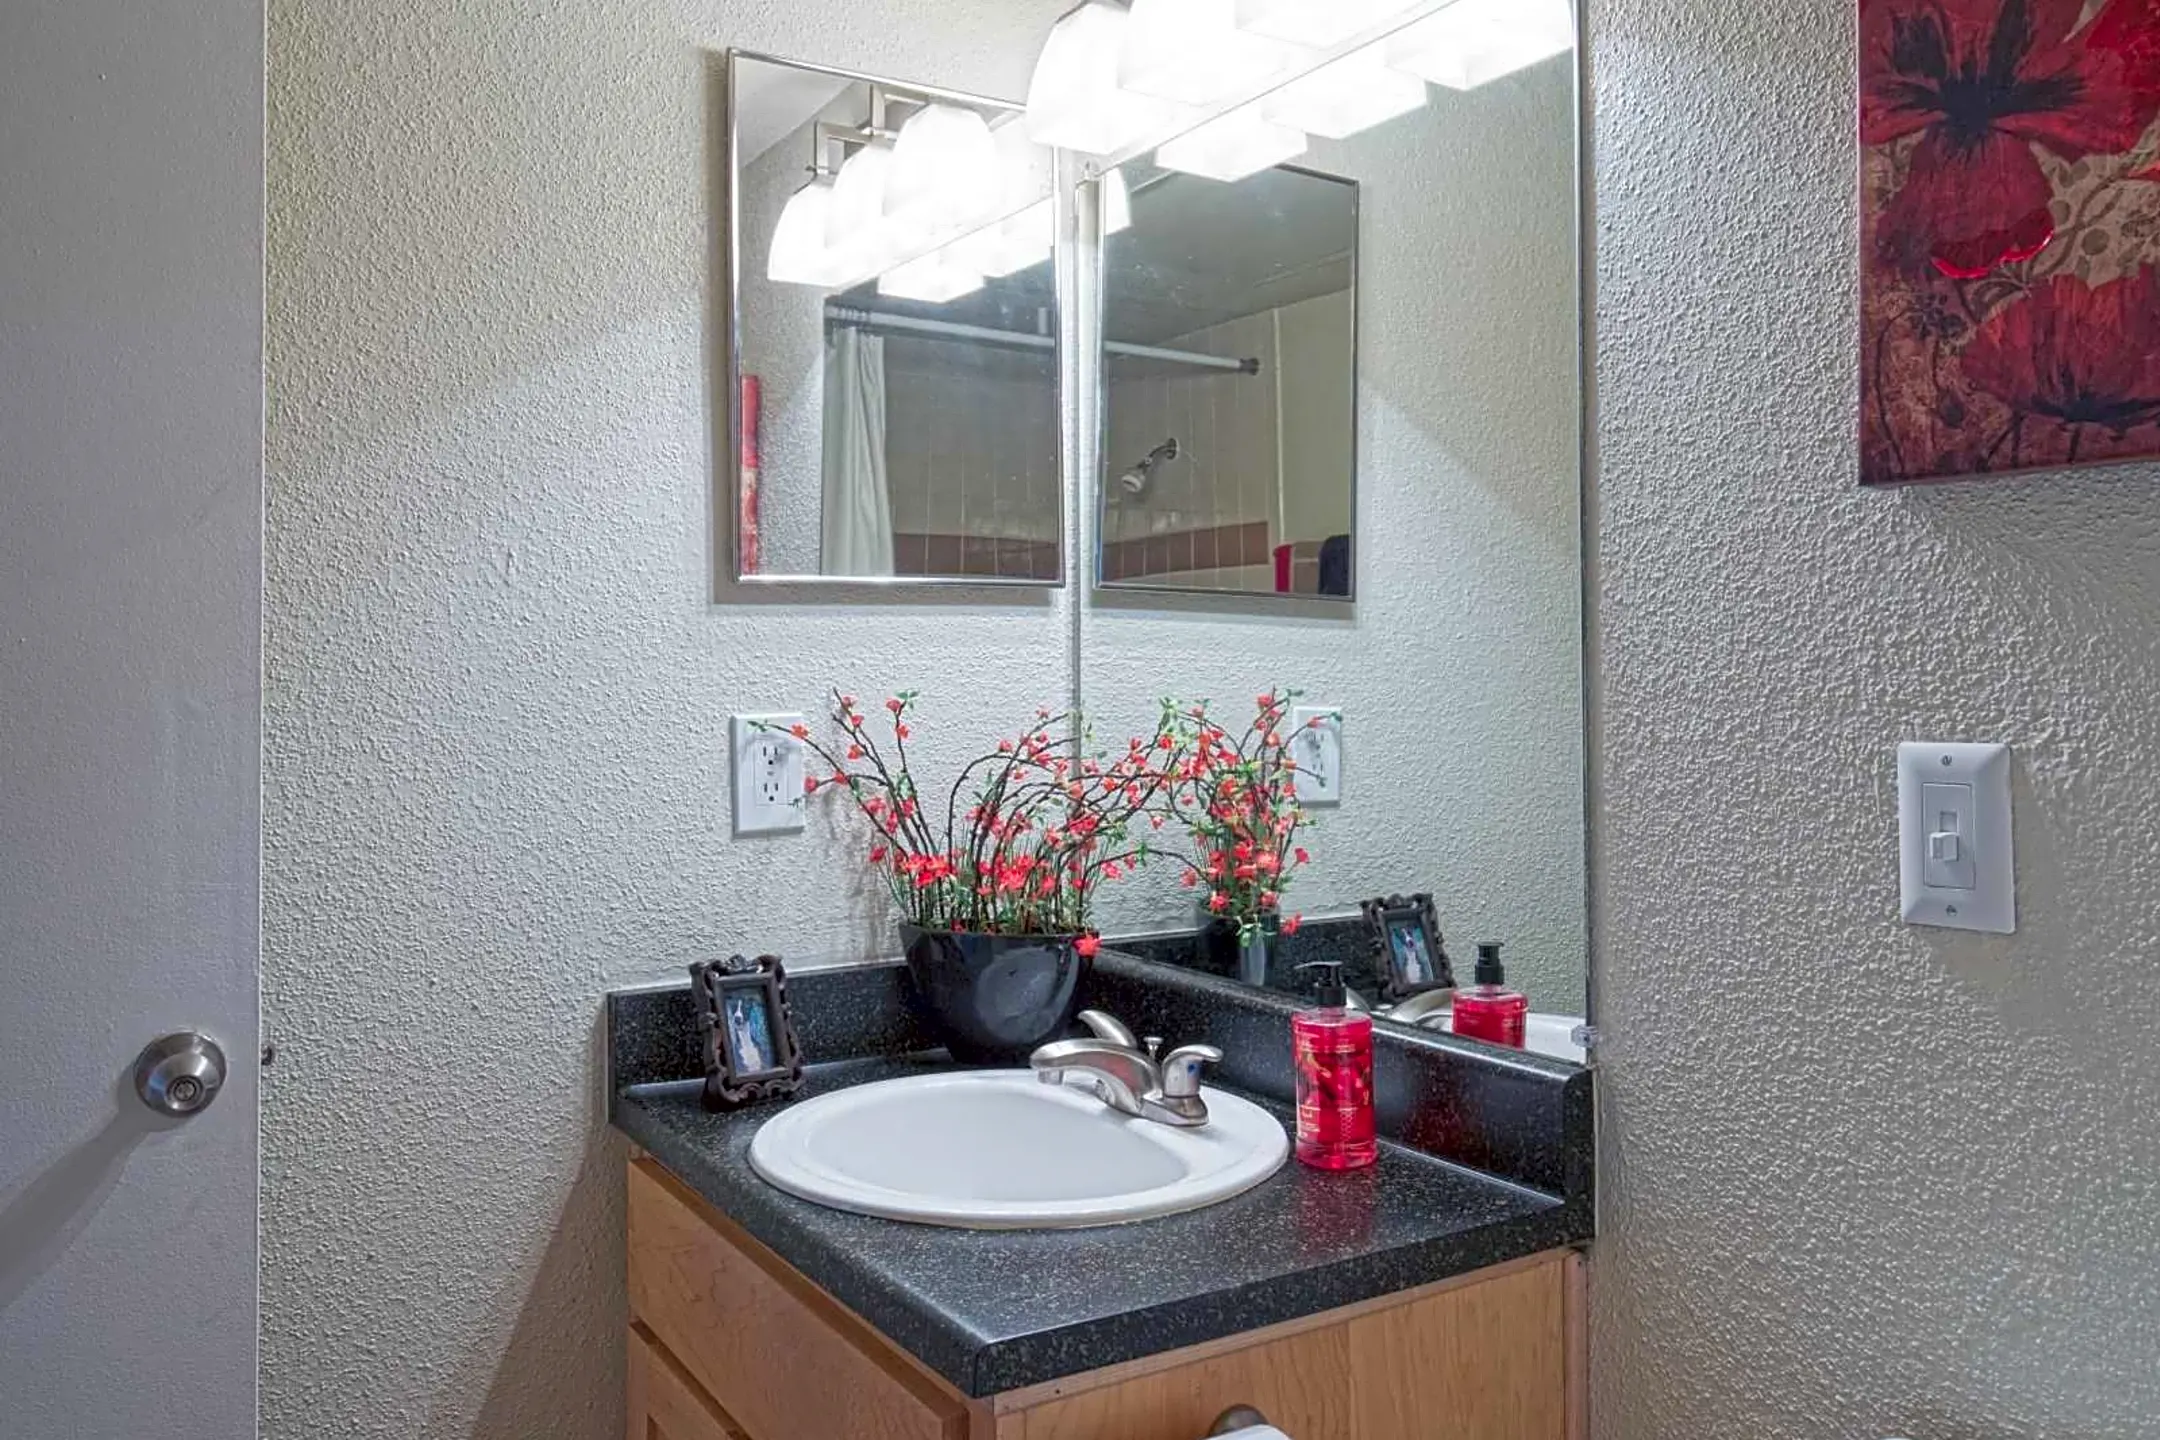 Bathroom - The Pointe at City Center - Lenexa, KS